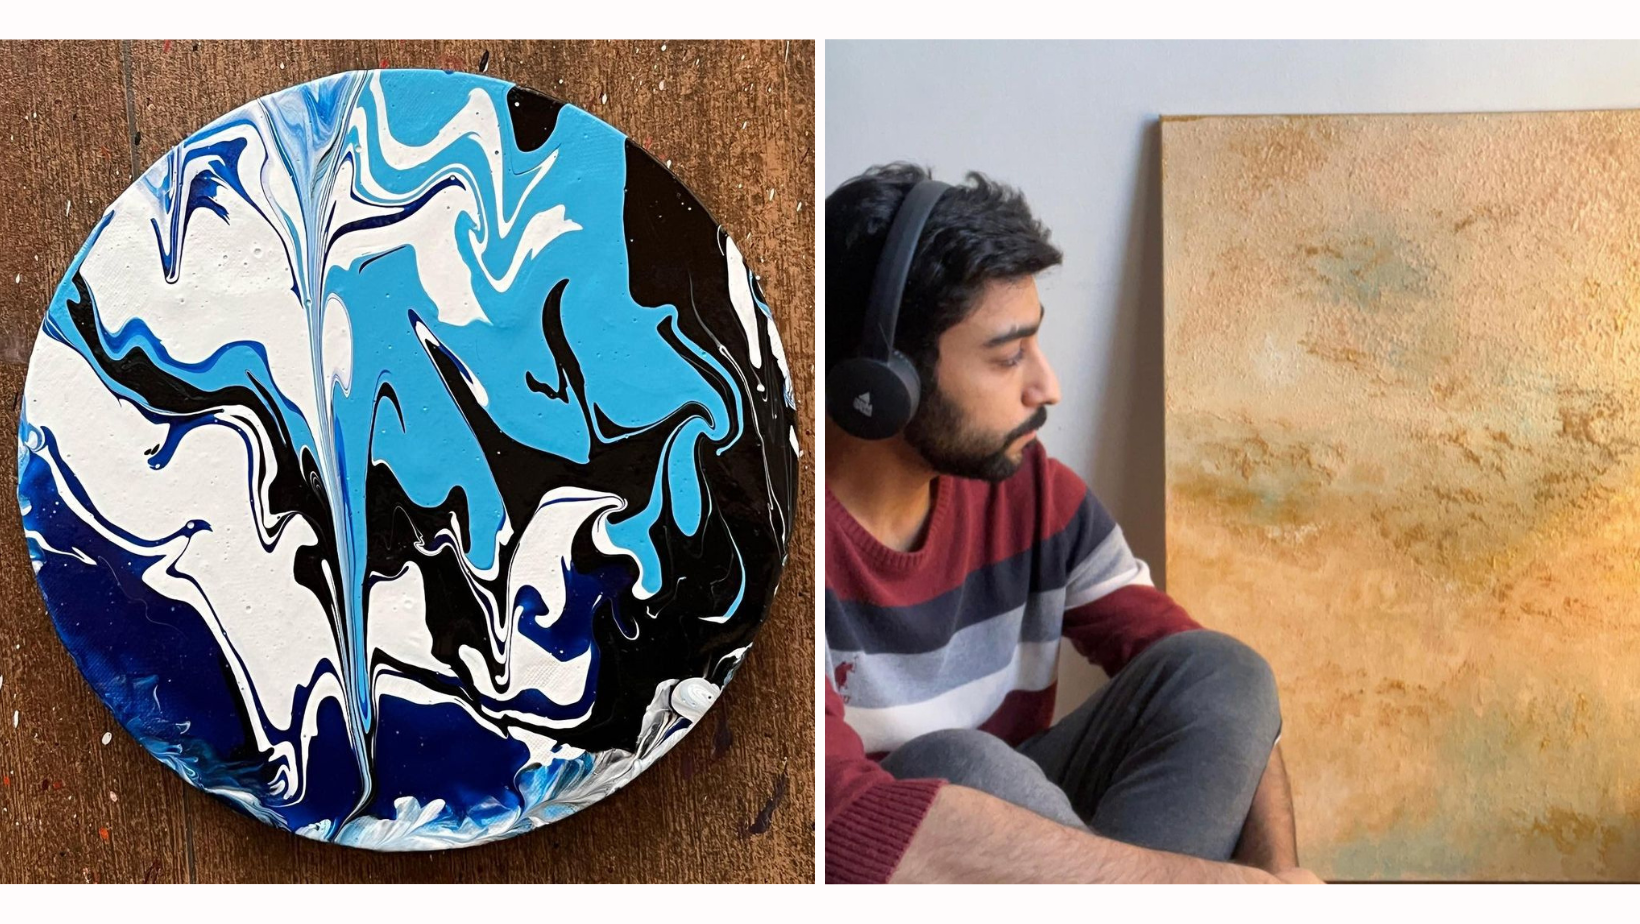 Saud Abudllaziz, local artists in bahrain, acrylic paintings in bahrain, abstract art in bahrain, abstract art, bahraini talent, local artists in bahrain, bahraini artists, bahraini artist, localbh